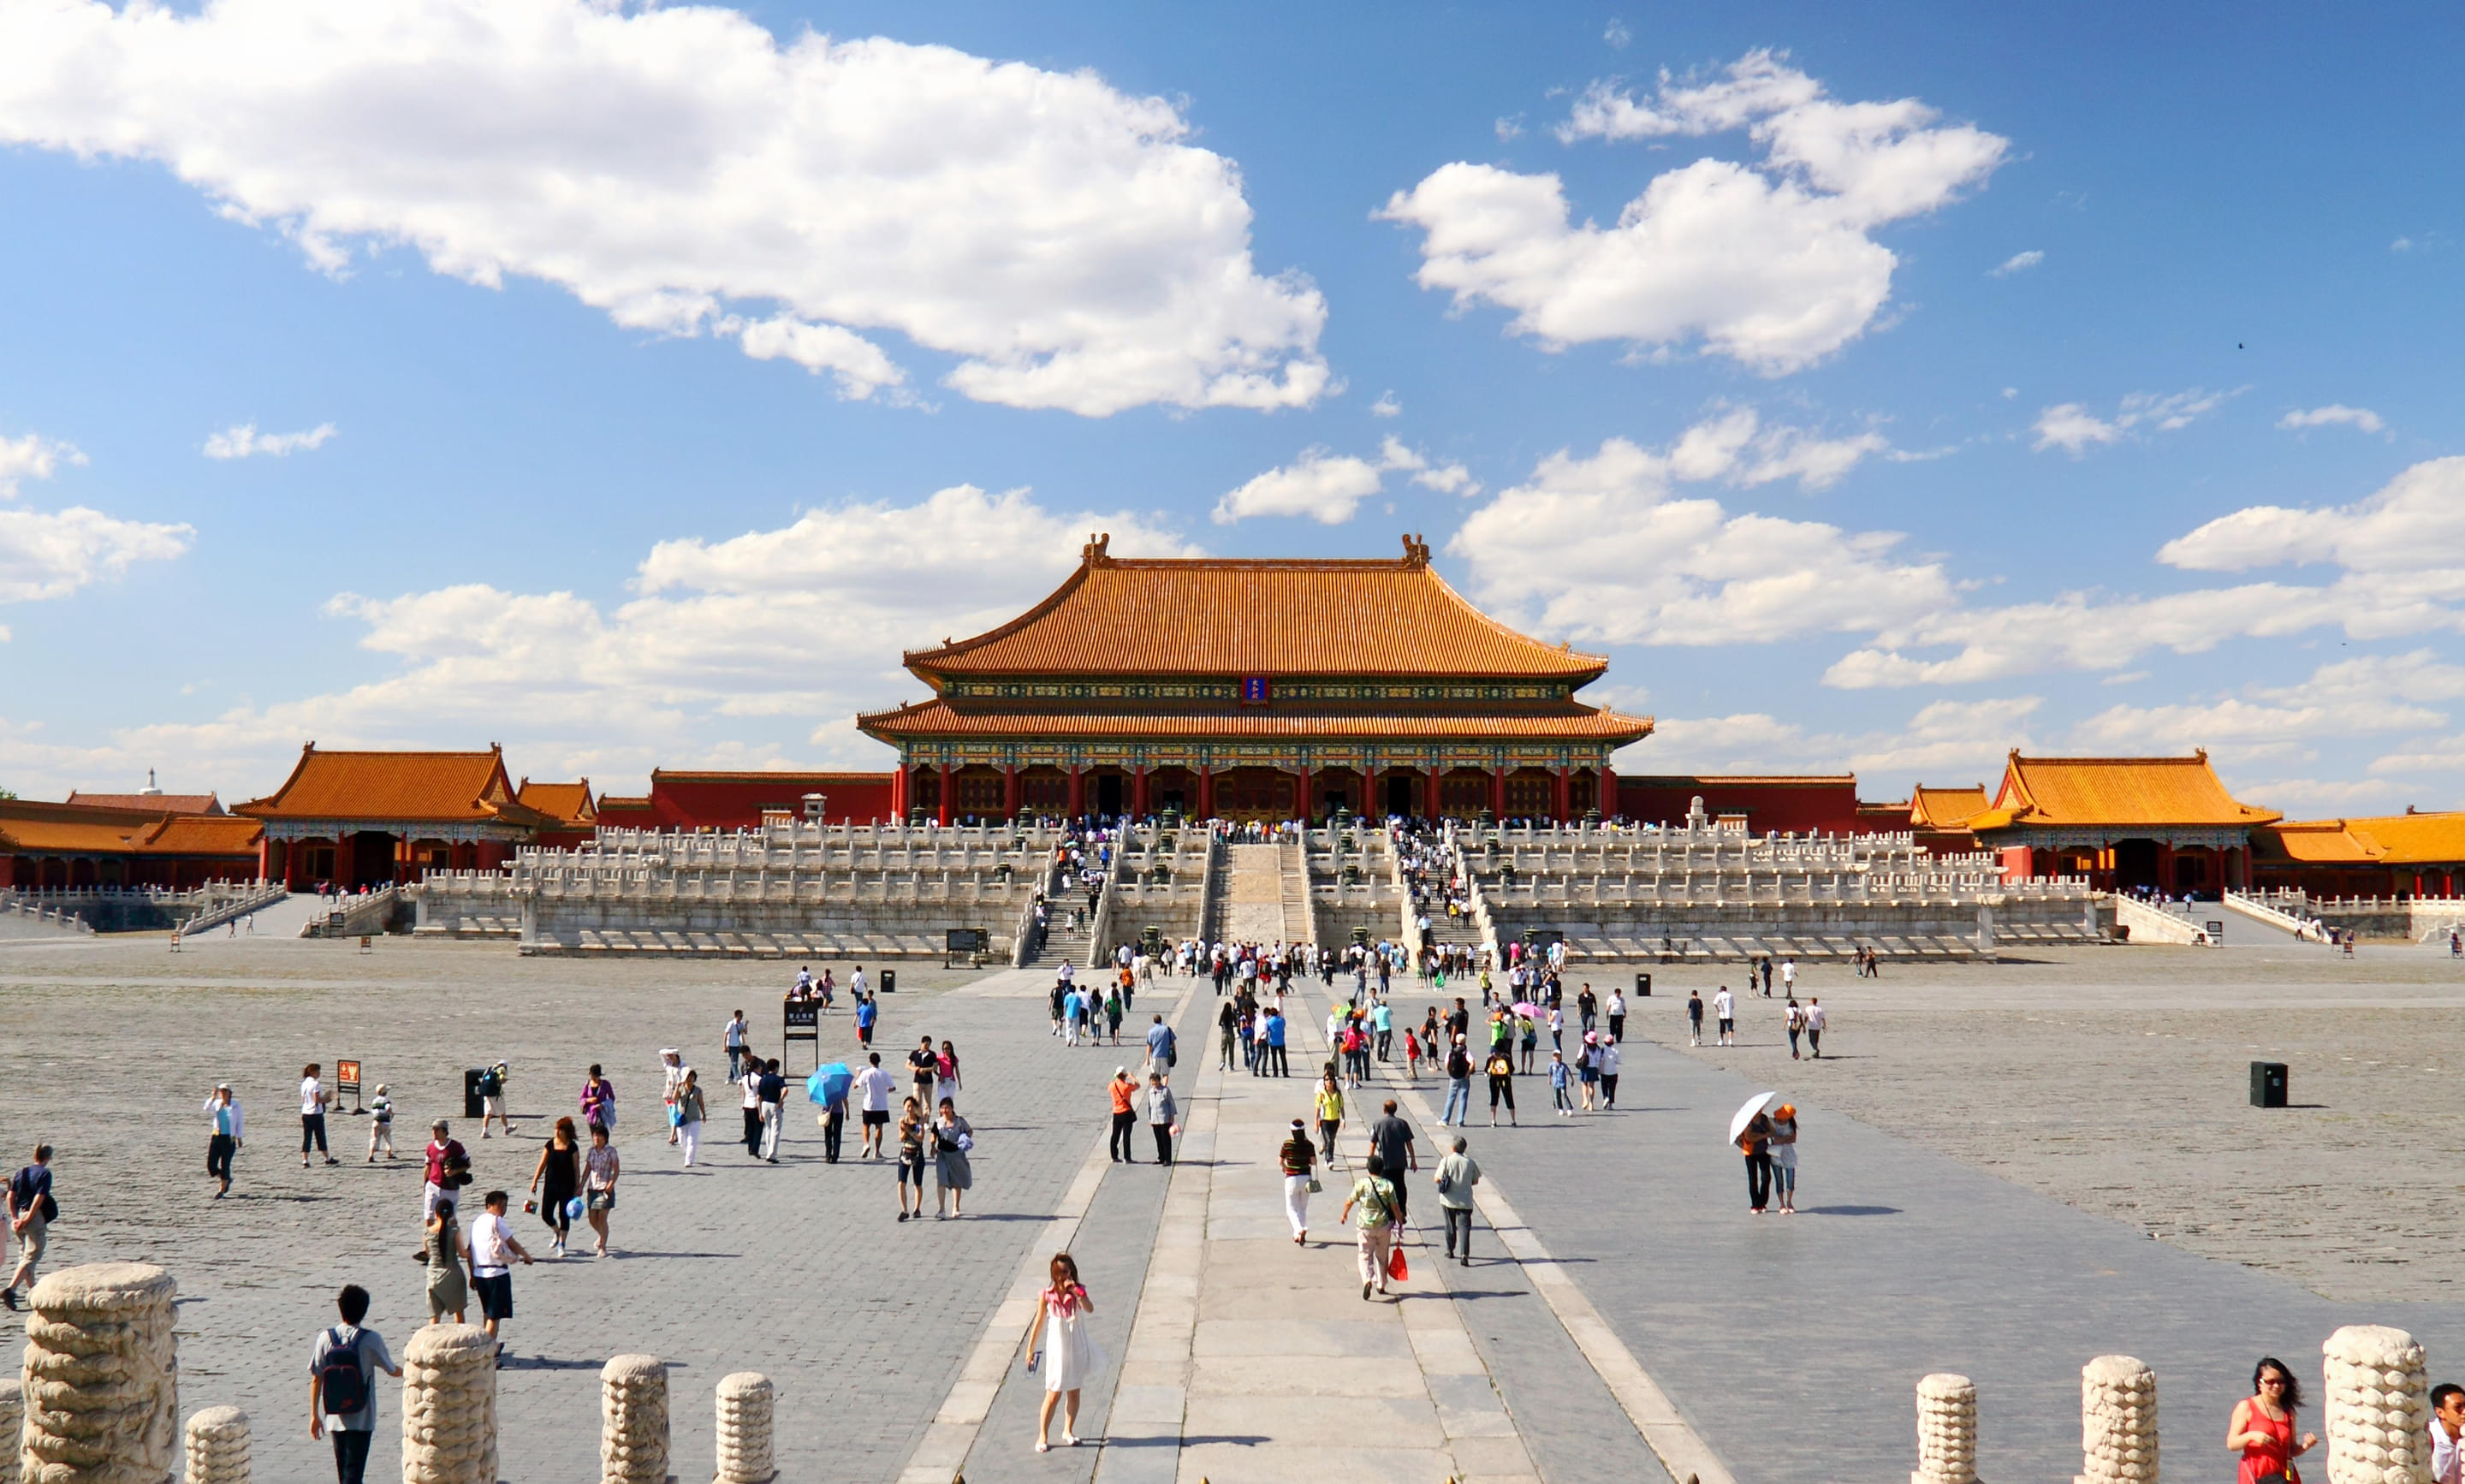 Tiananmen Square Overview